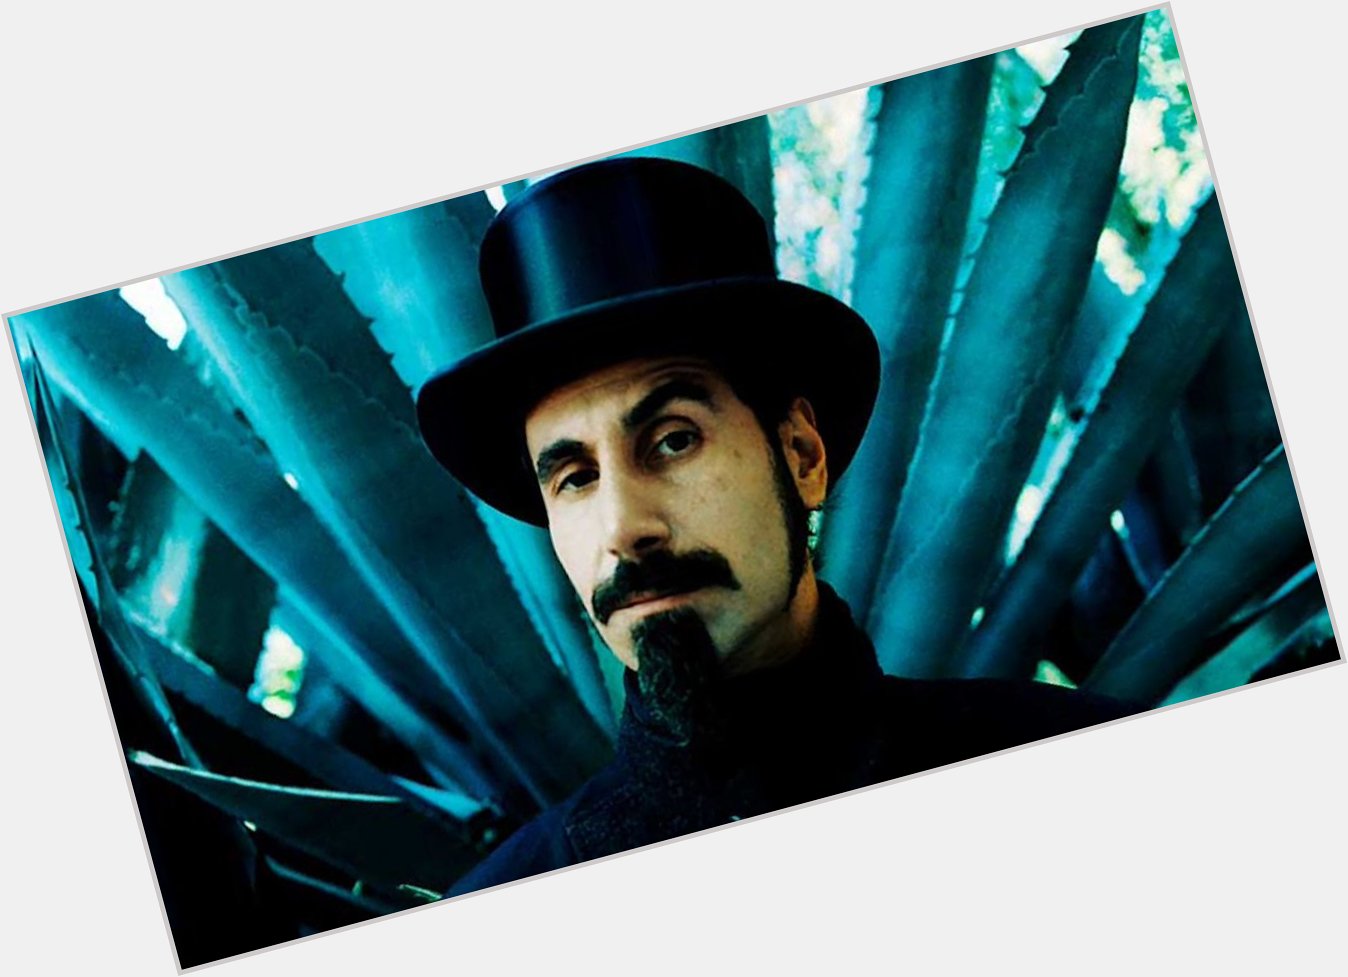 Happy Birthday Serj Tankian

System of a Down - Toxicity 

 